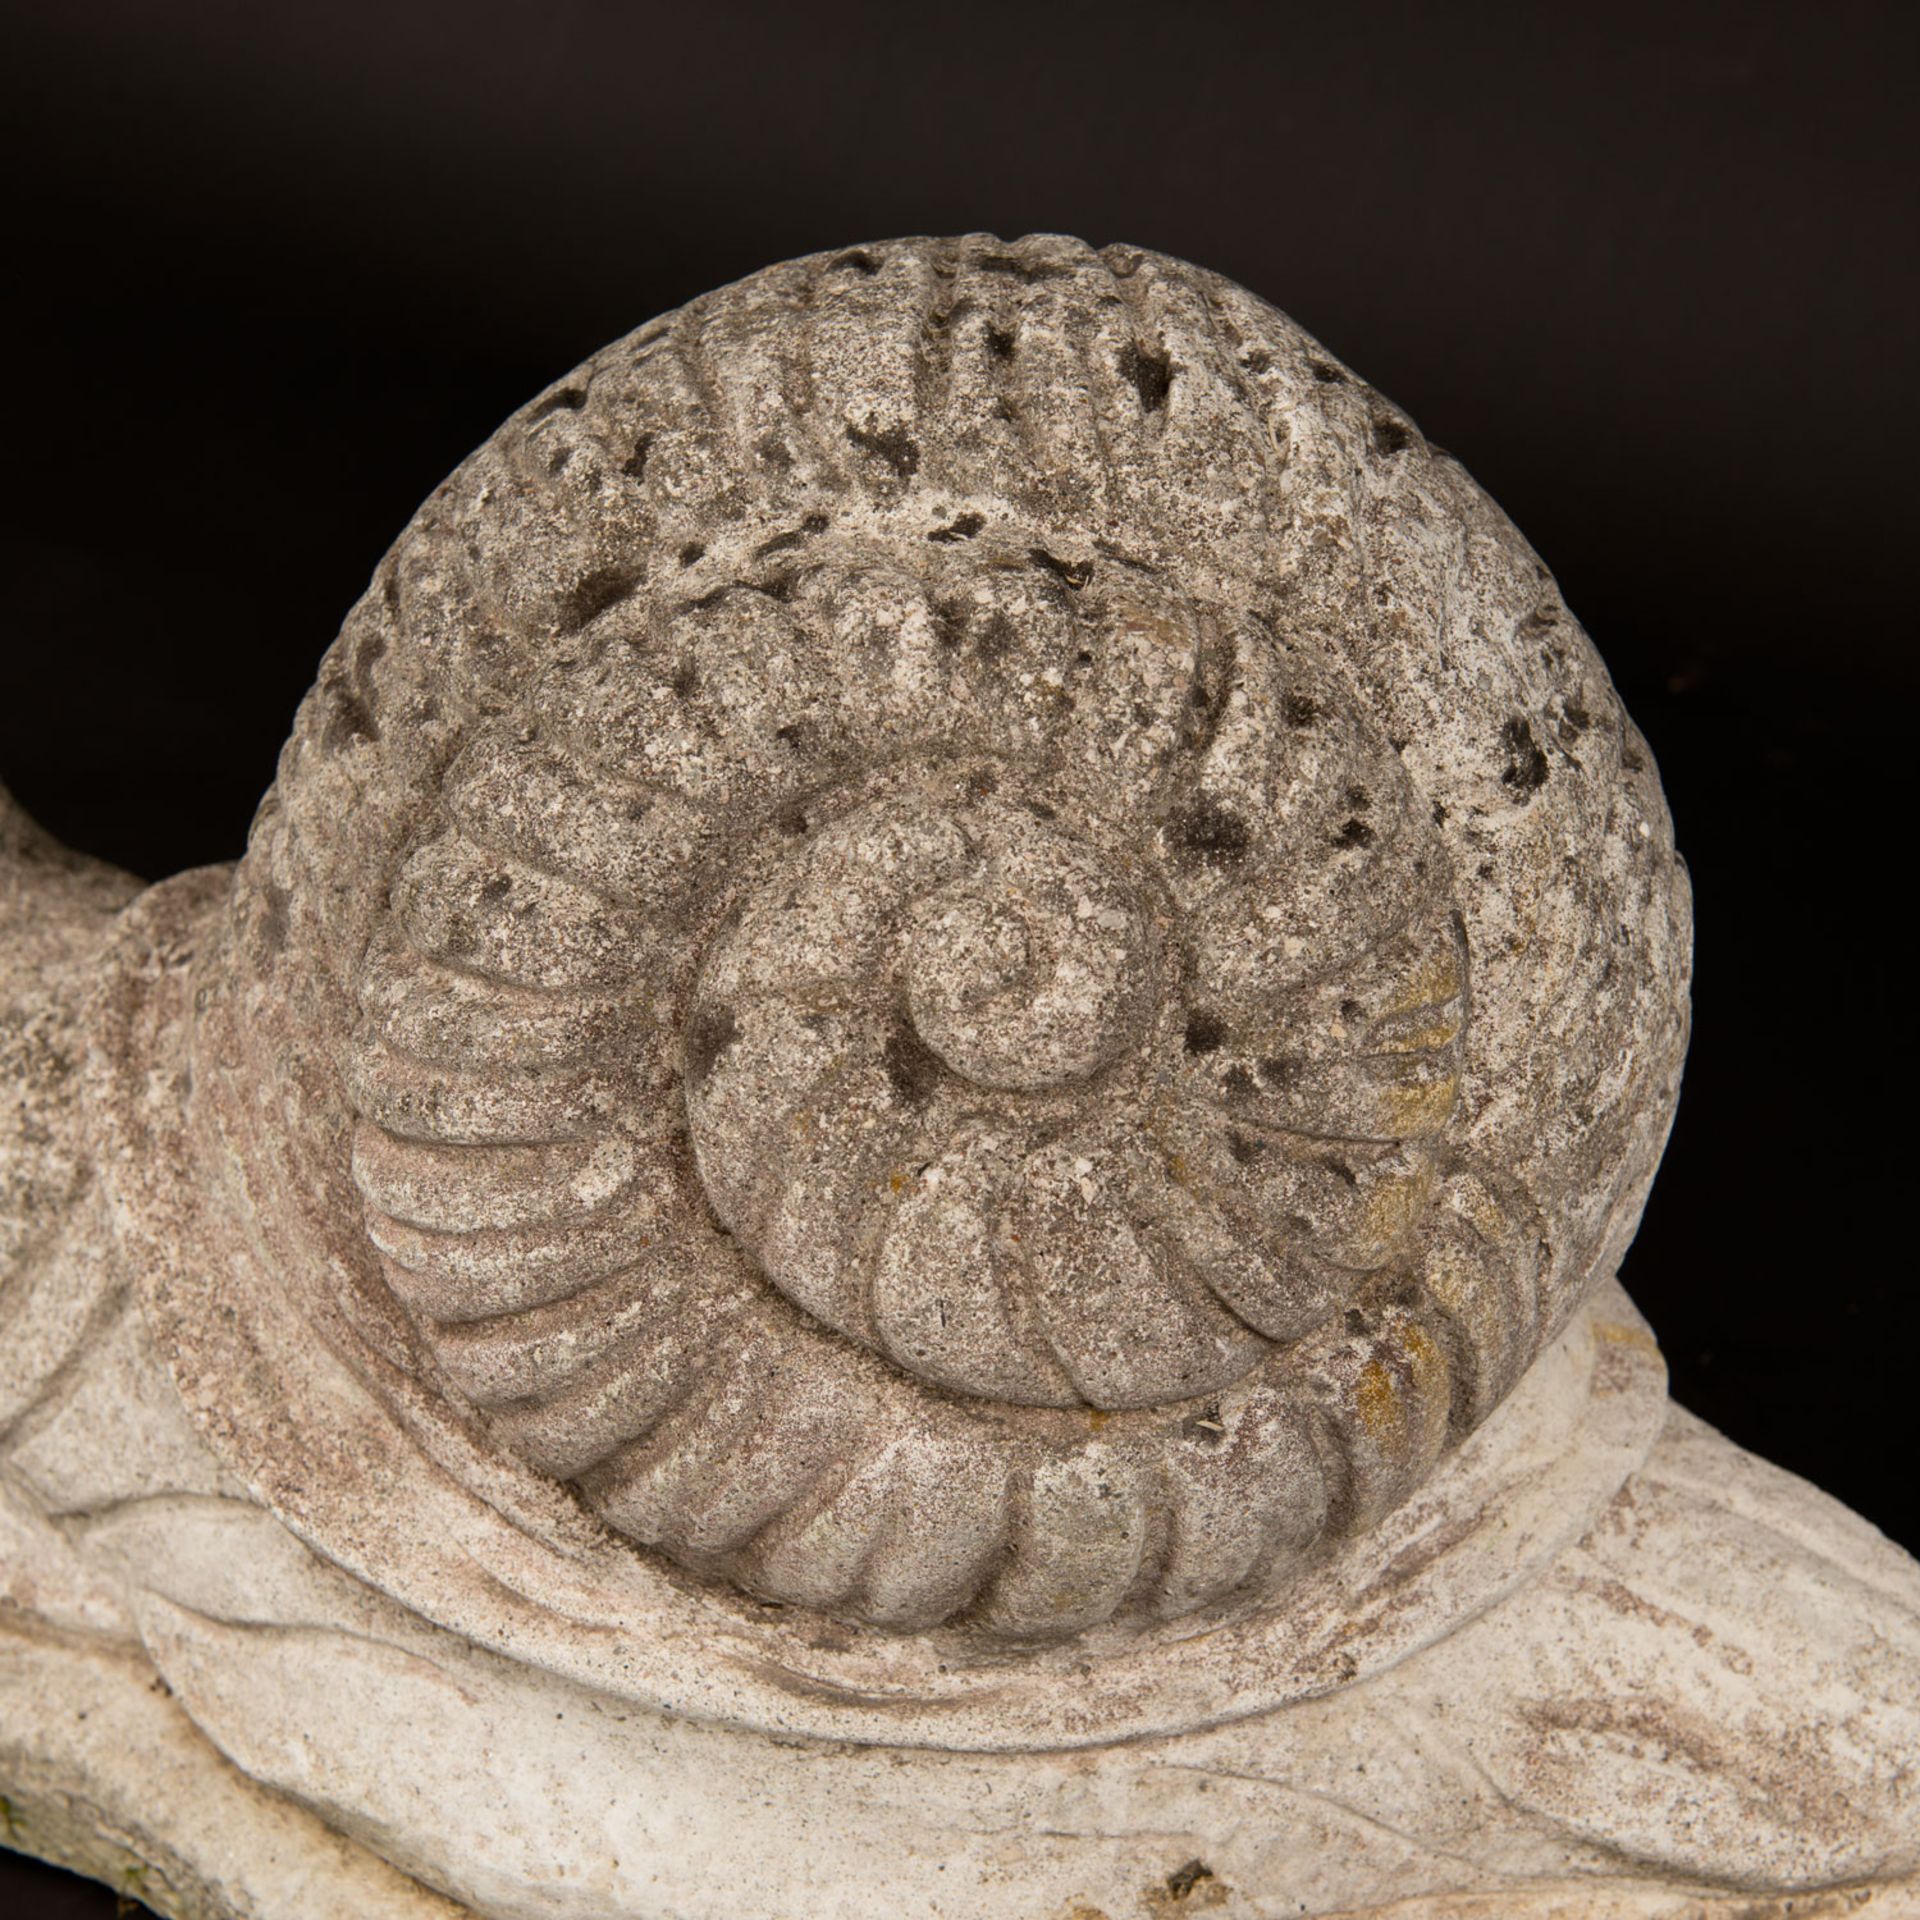 Garden snail - Image 3 of 3